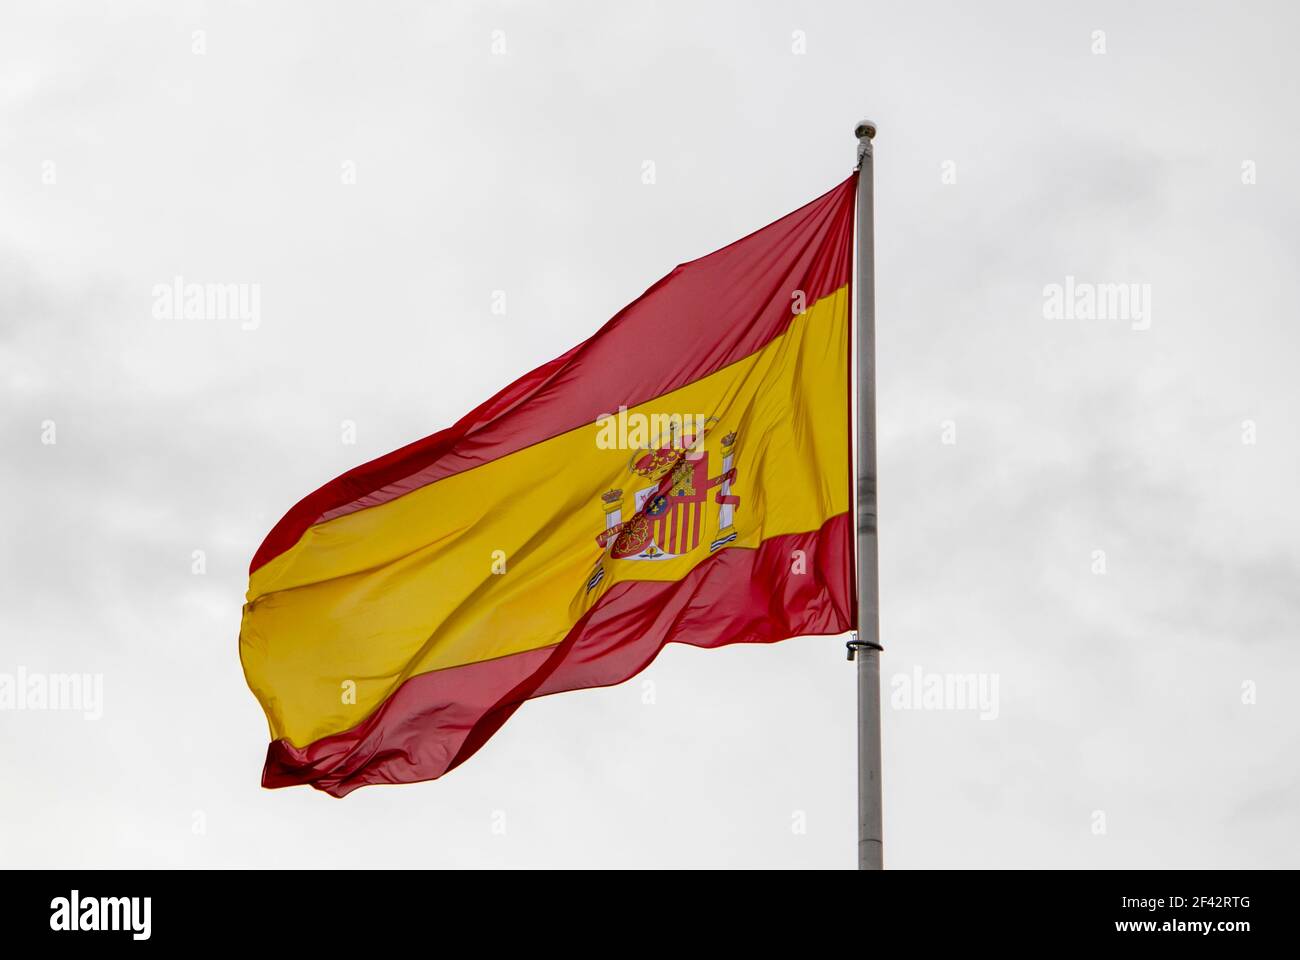 Bandera españa hi-res stock photography and images - Alamy